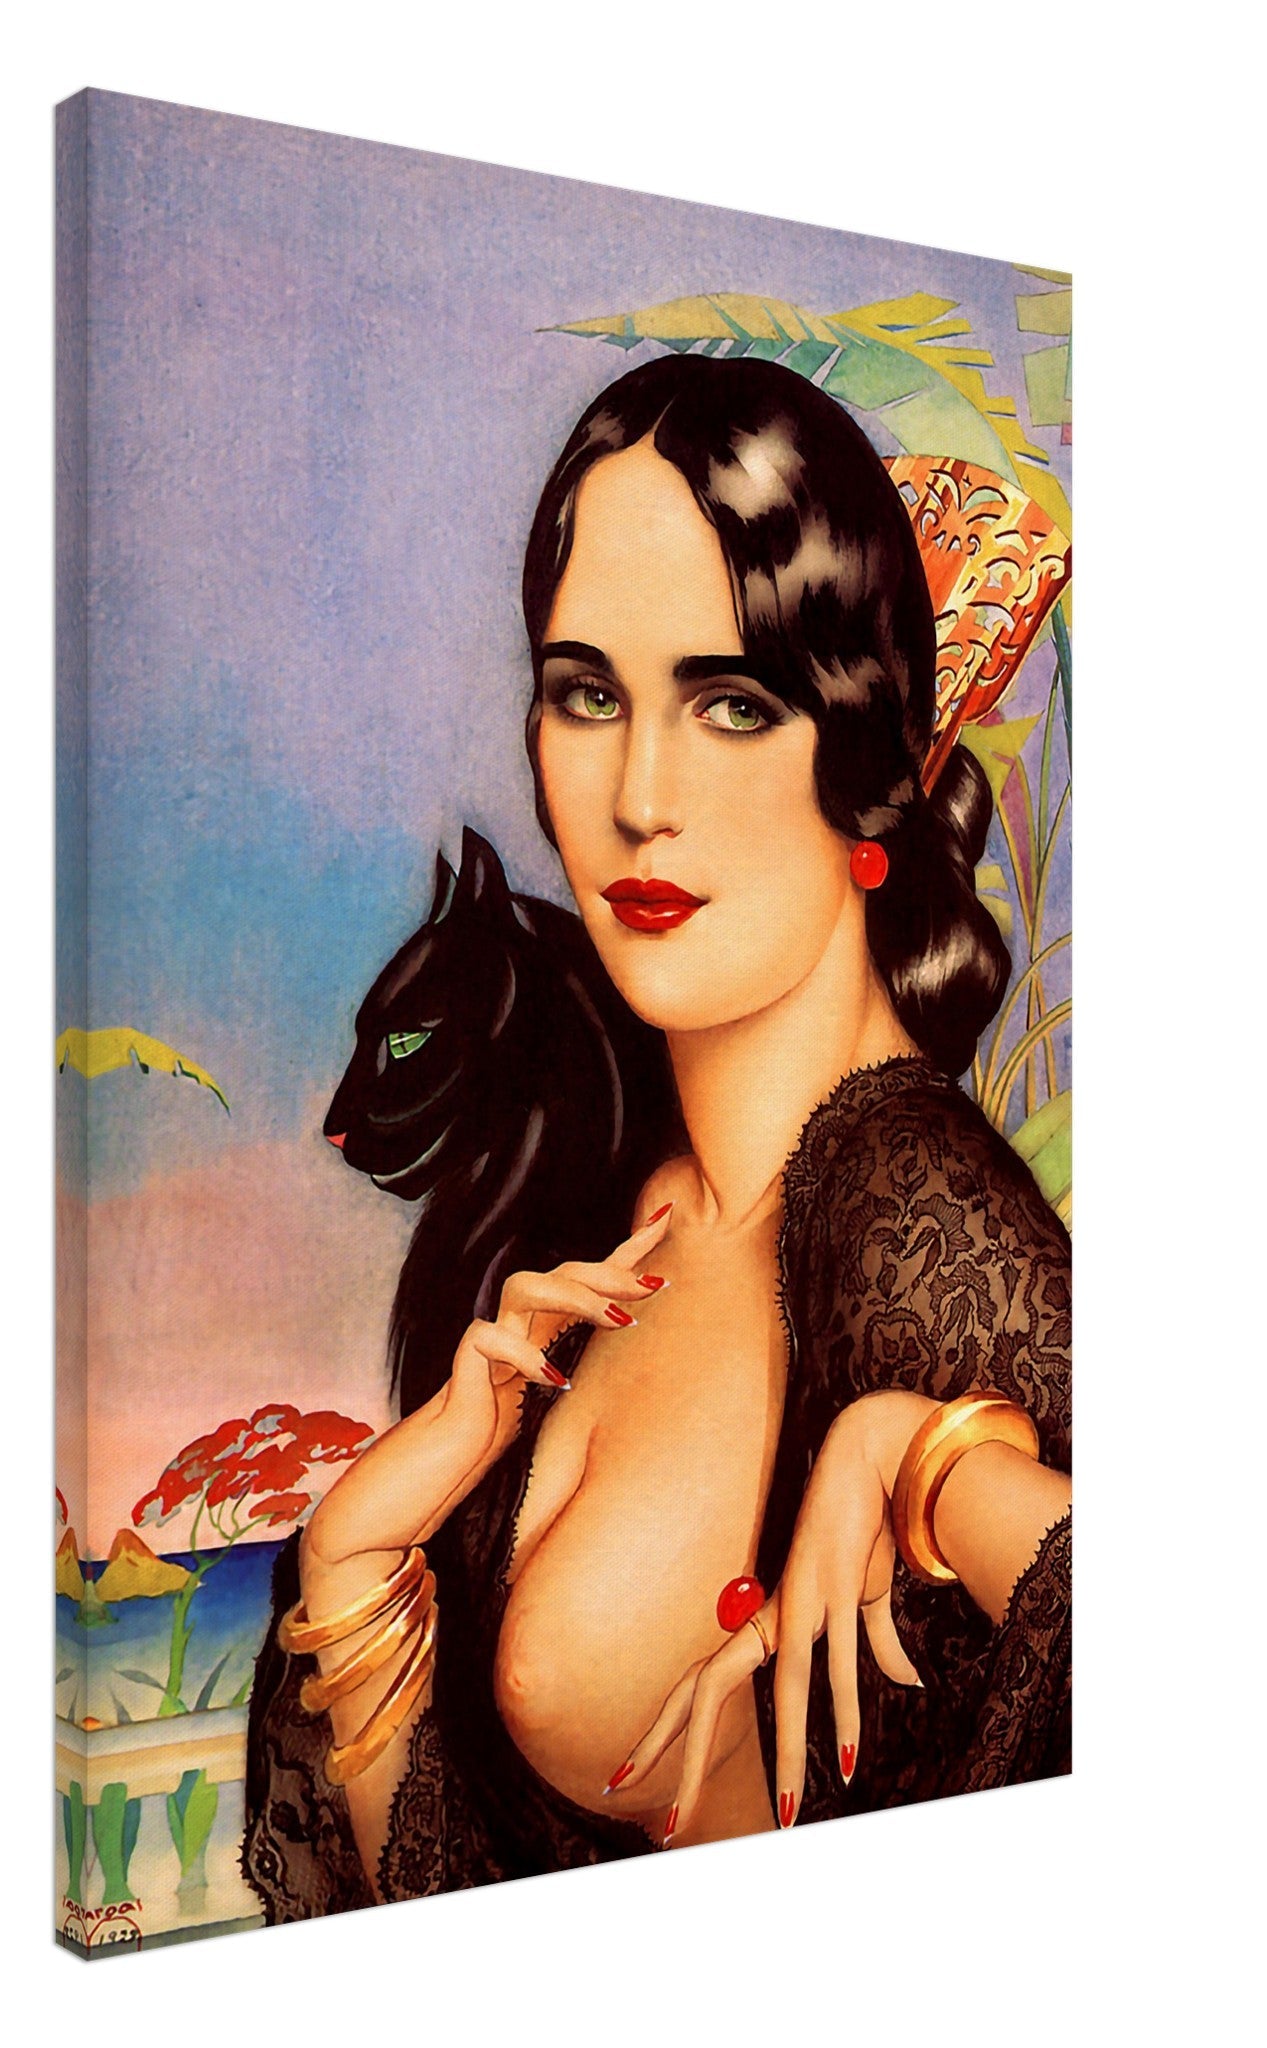 Vintage Pin Up Girl Canvas, Alberto Vargas, Spanish Gypsy Black Cat - Vintage Art - Retro Pin Up Girl Canvas Print - 1928 - WallArtPrints4U